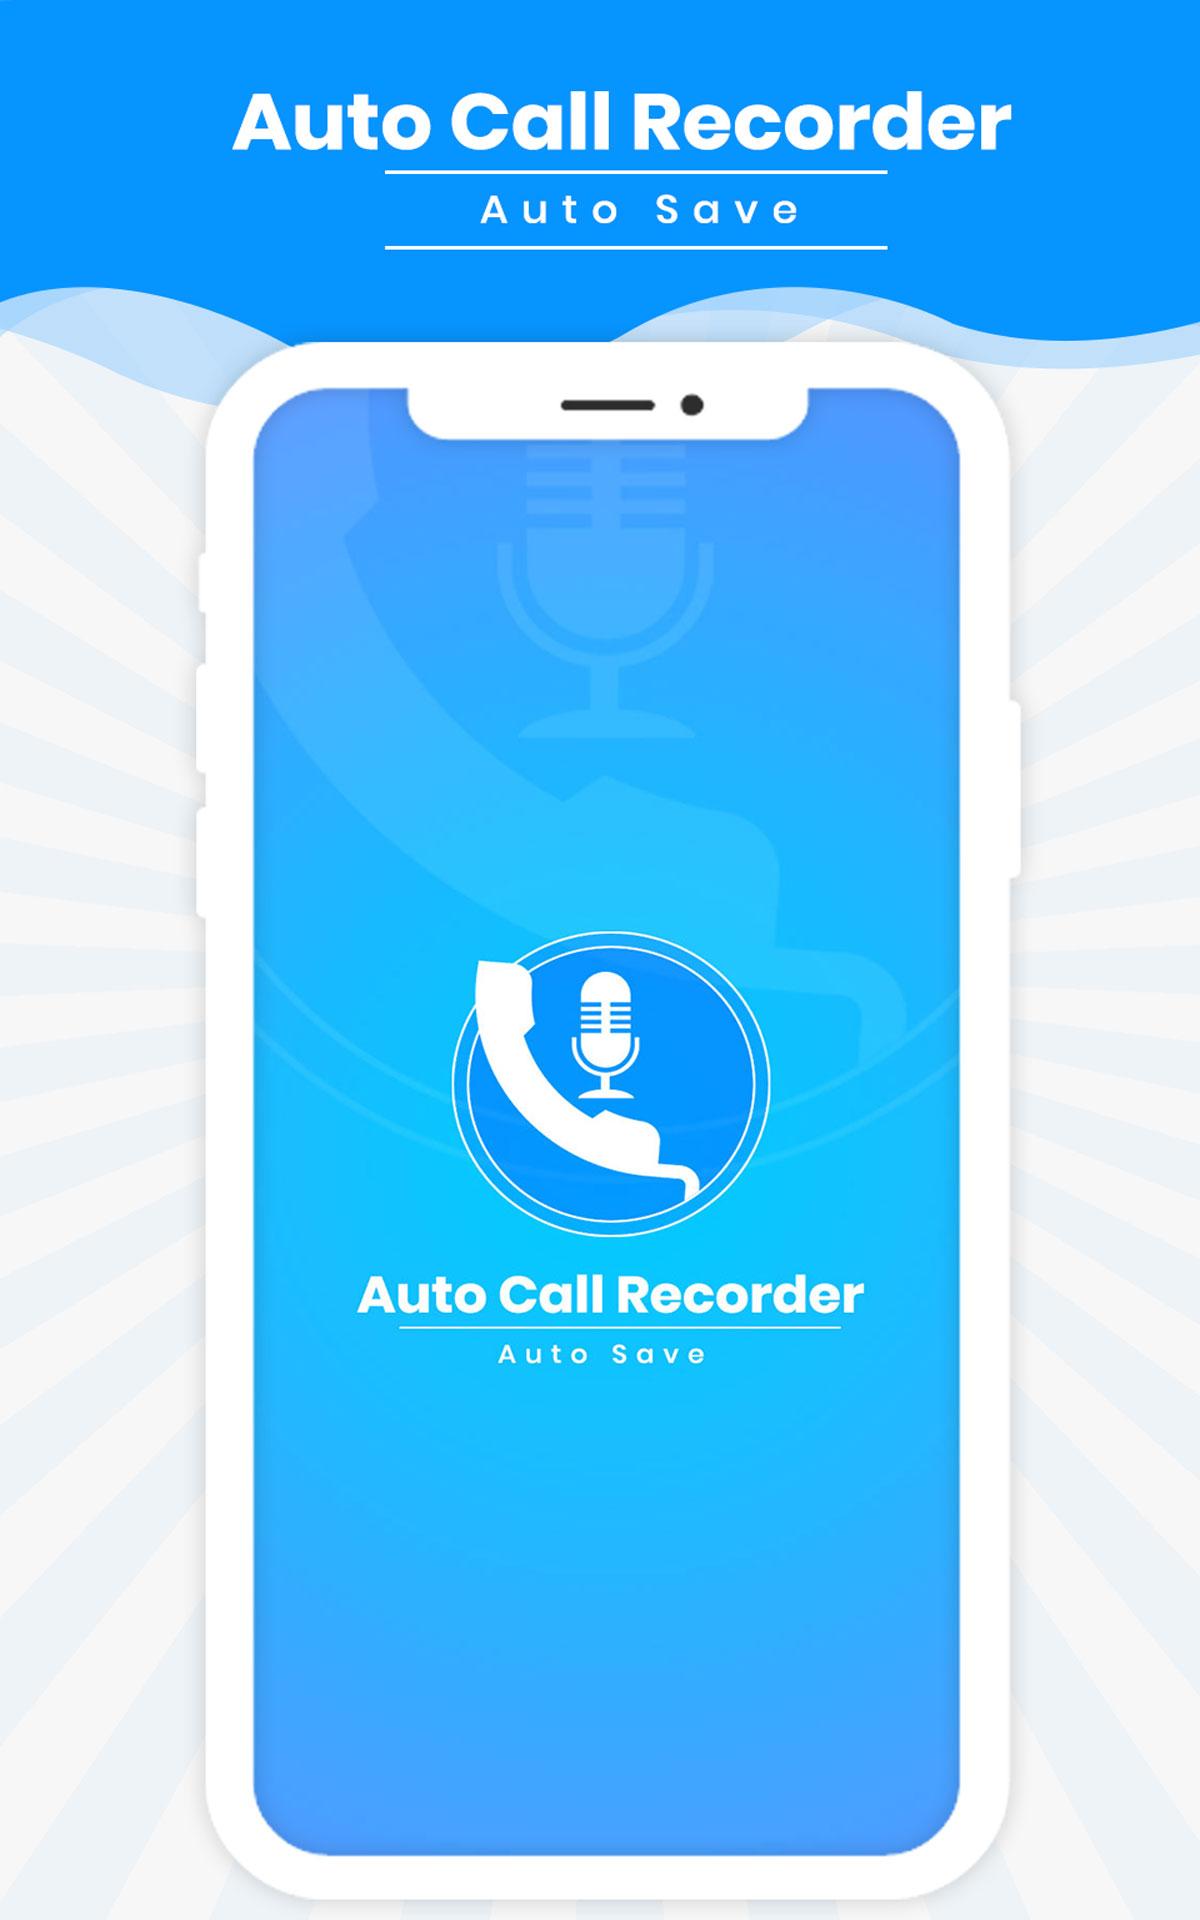 Auto Call Recorder - Auto Save 1.0.4 Screenshot 7